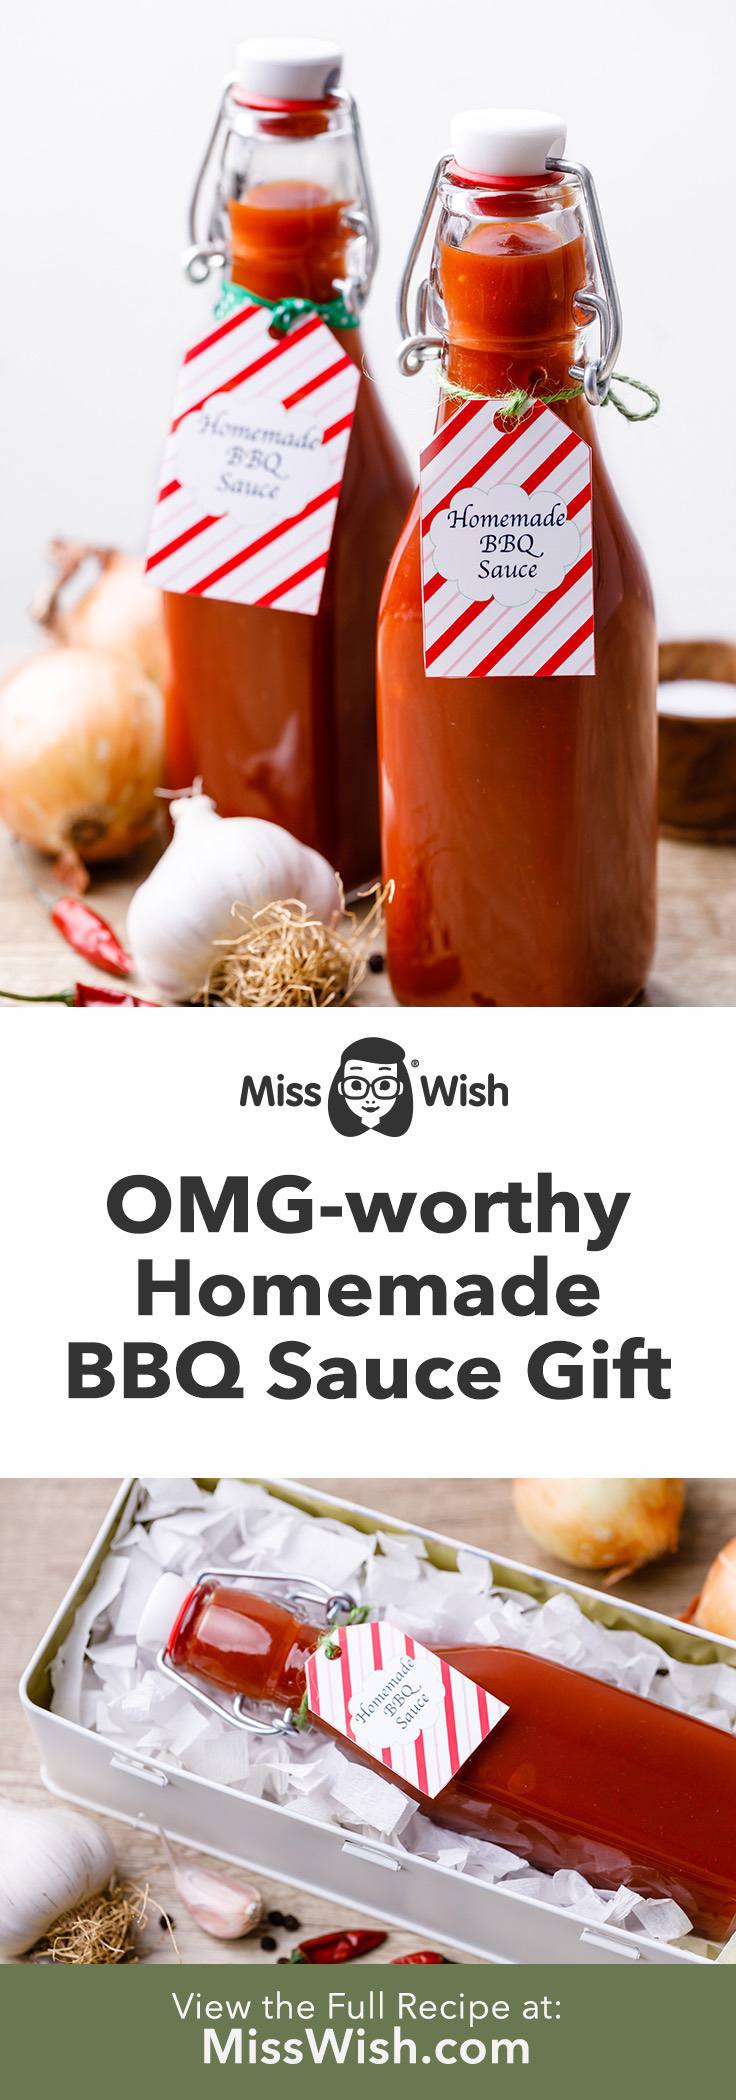 OMG-worthy Homemade BBQ Sauce Gift